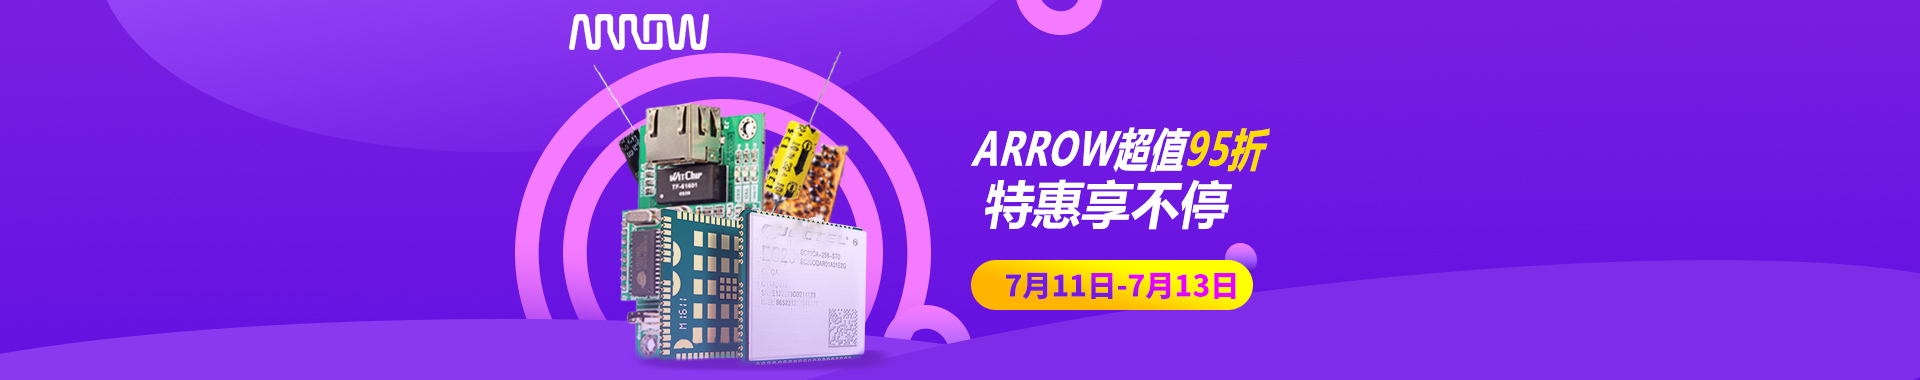 Arrow 首页广告.jpg